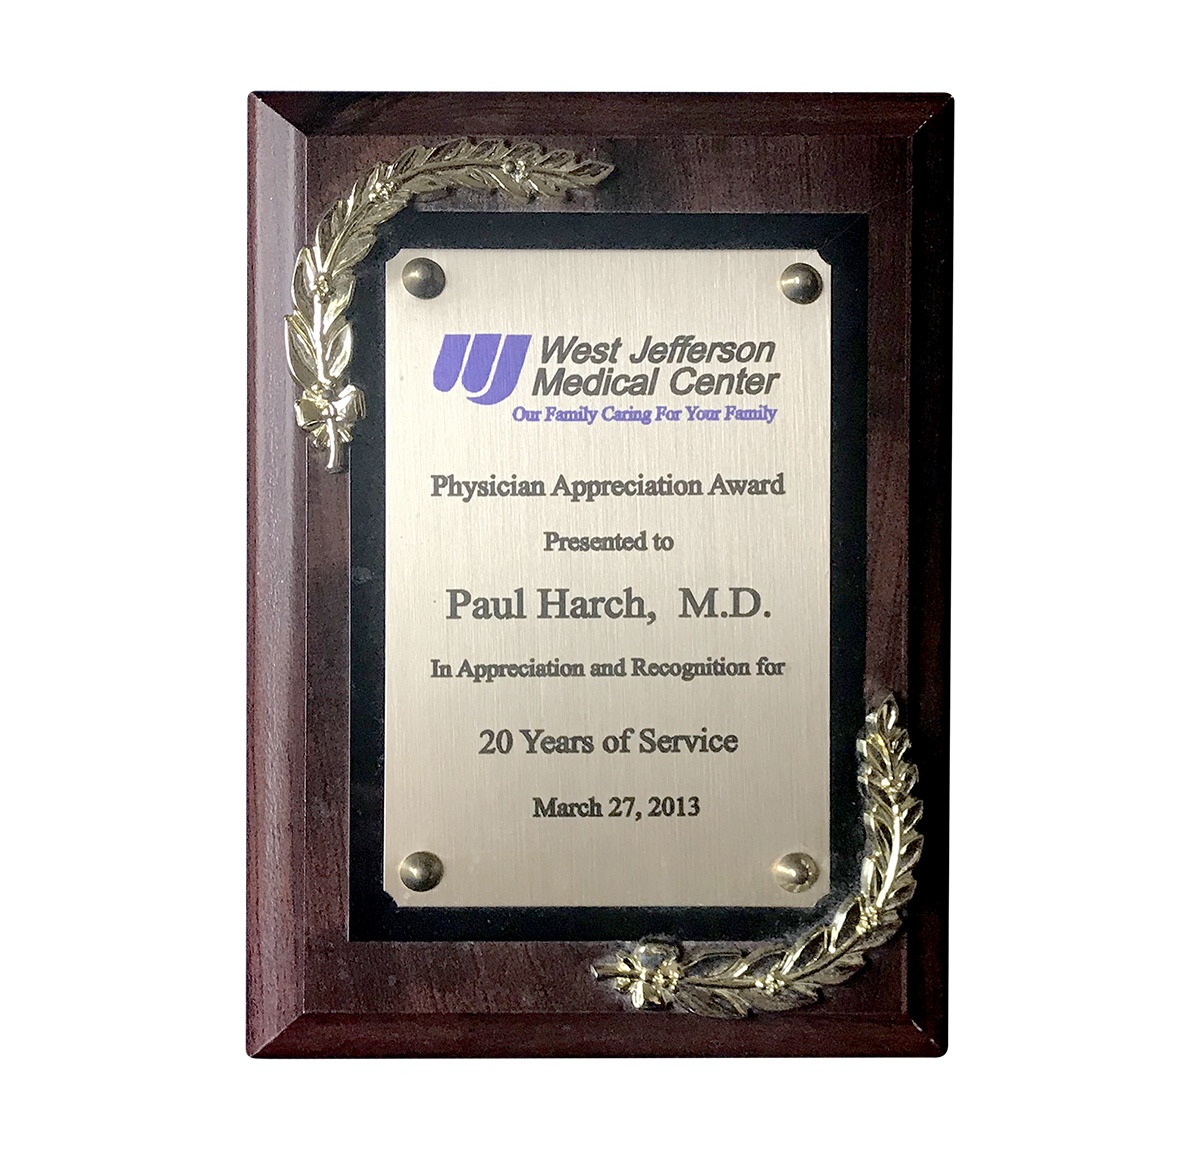 dr. harch hbot west jefferson medial center award